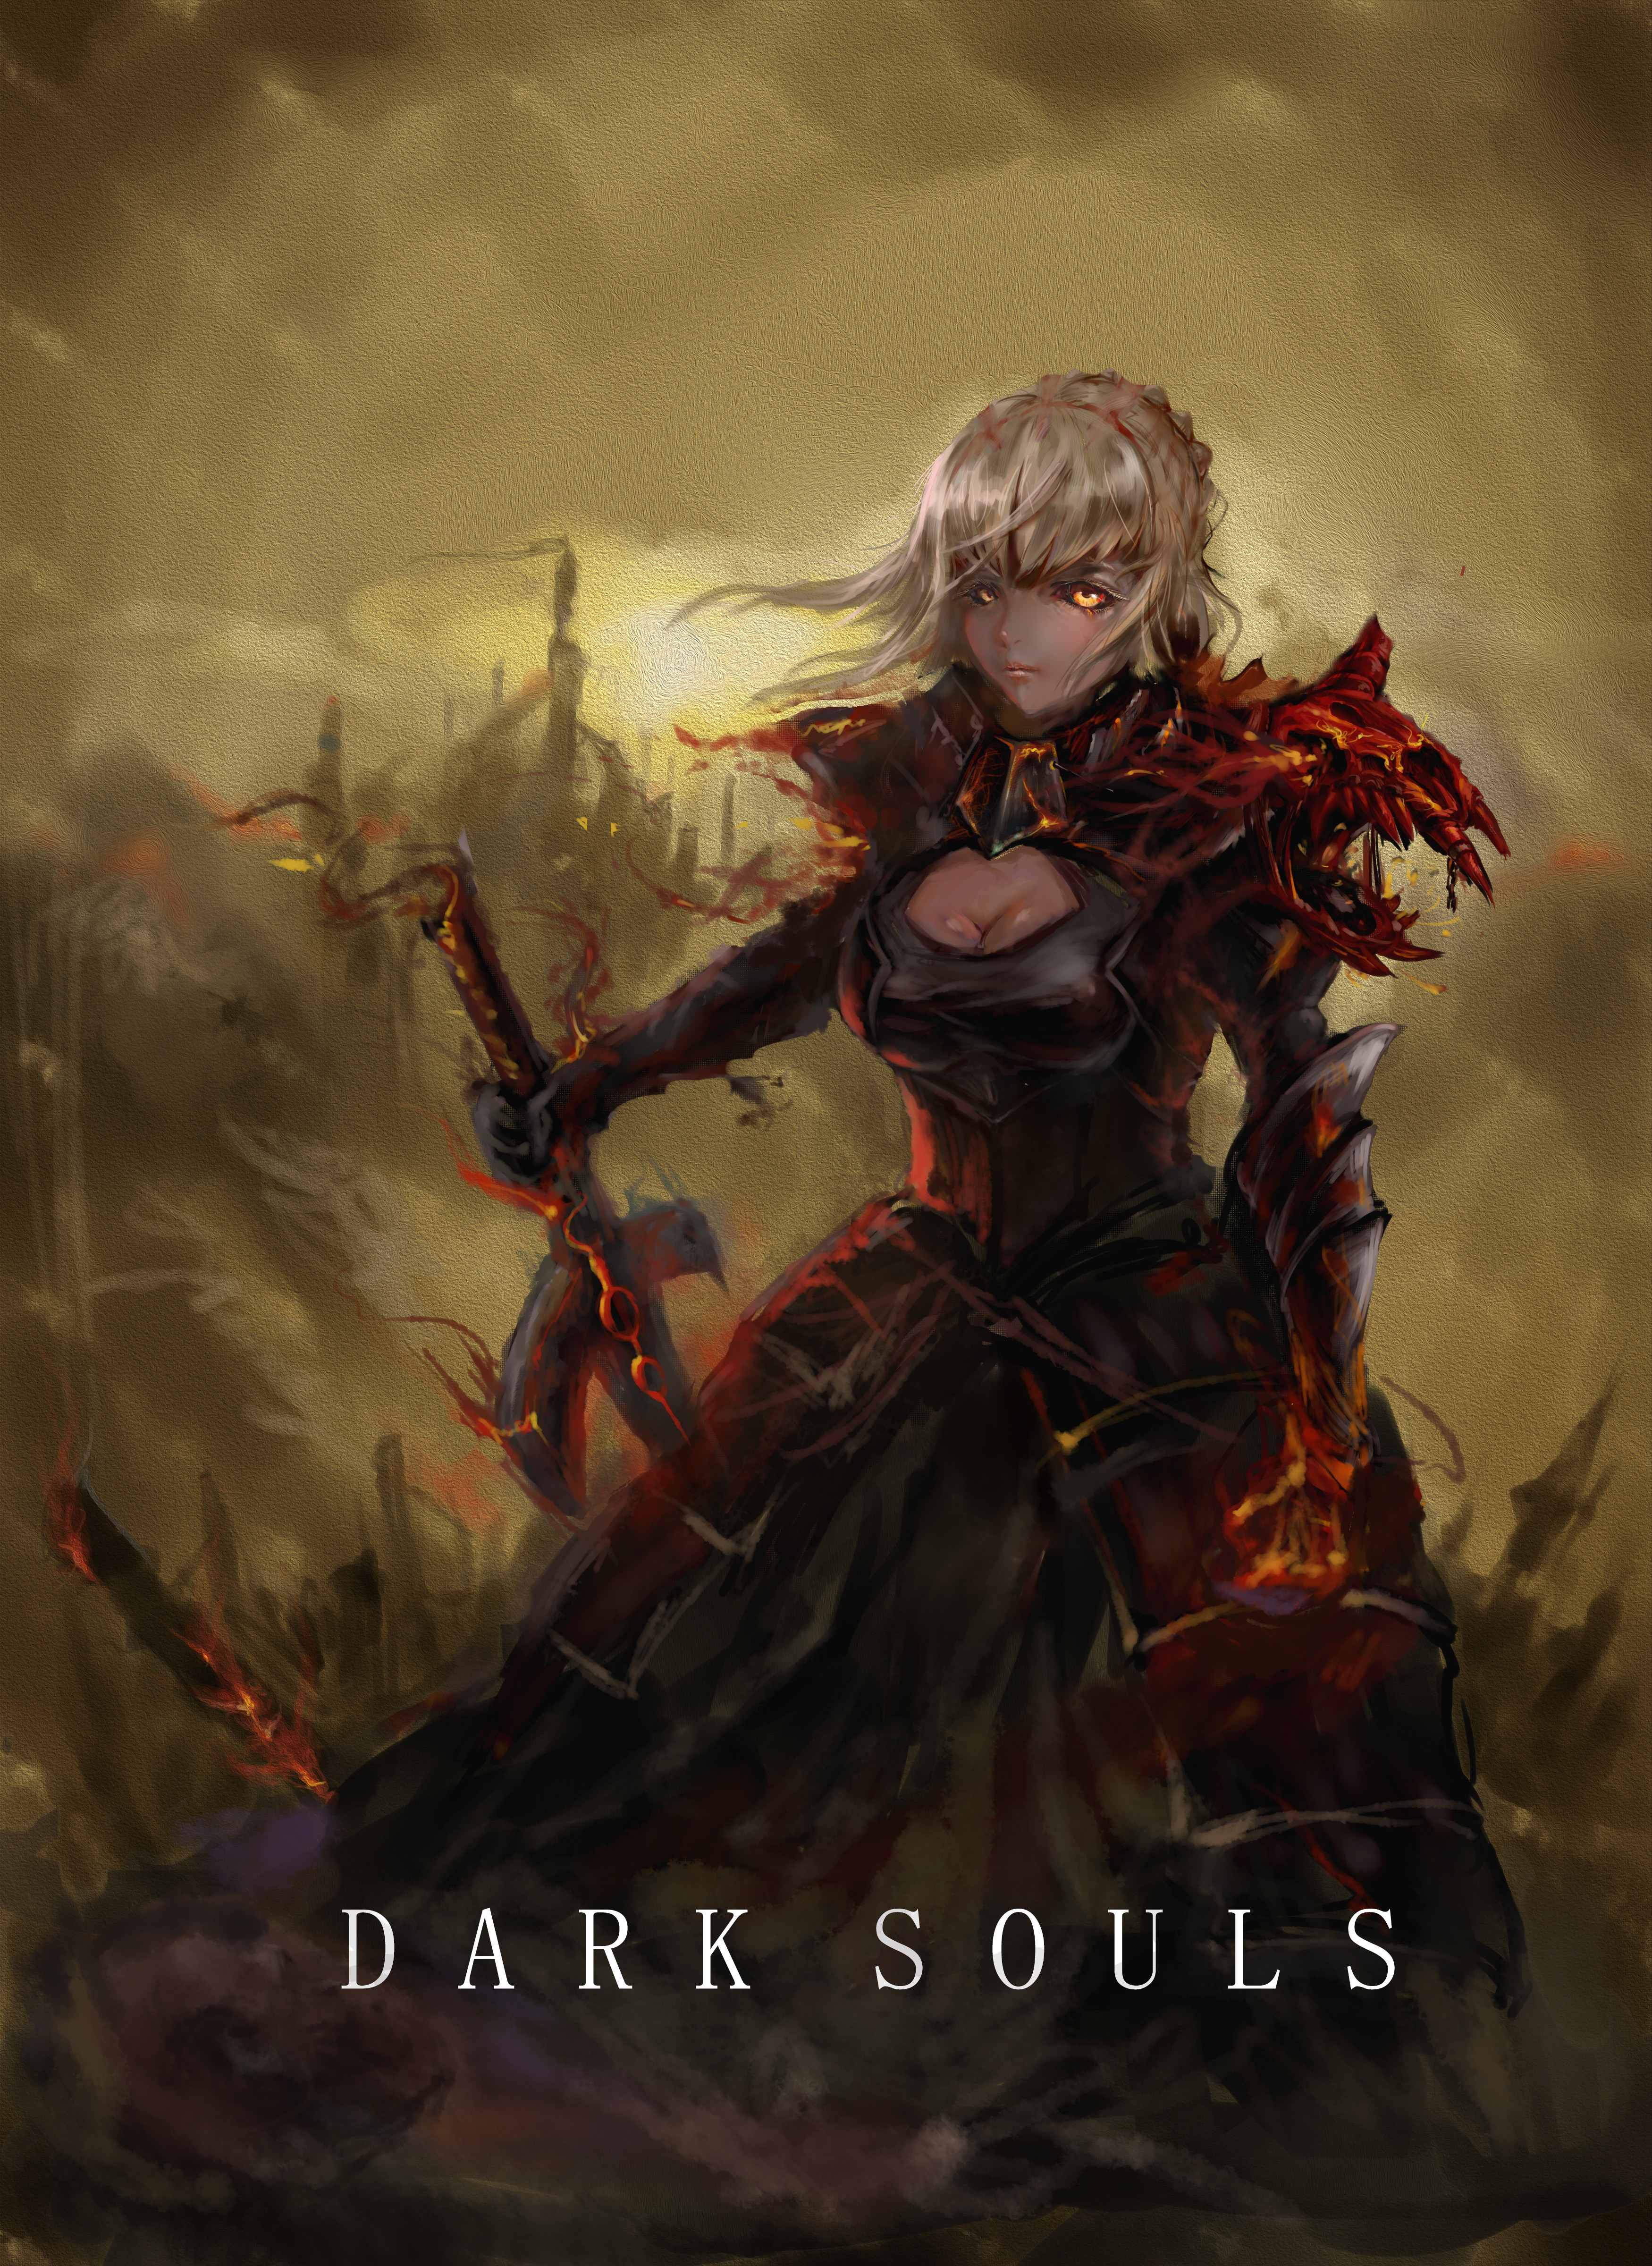 Dark Souls Anime: Will it follow the main storyline?